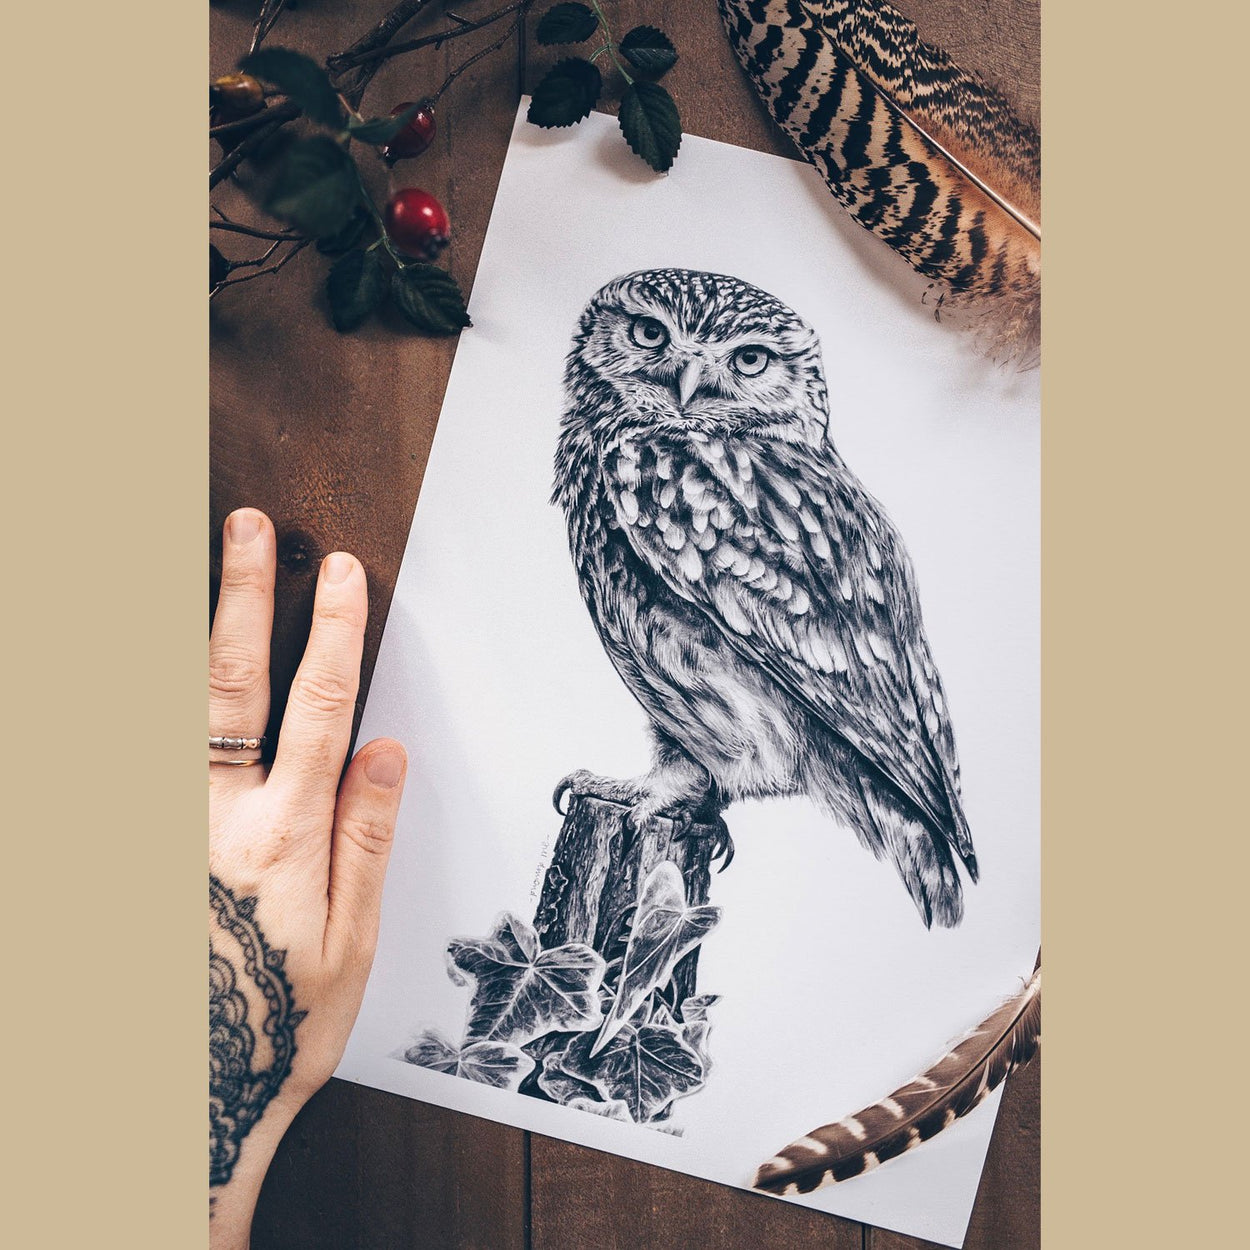 Little Owl Art Print on Table 2 - The Thriving Wild